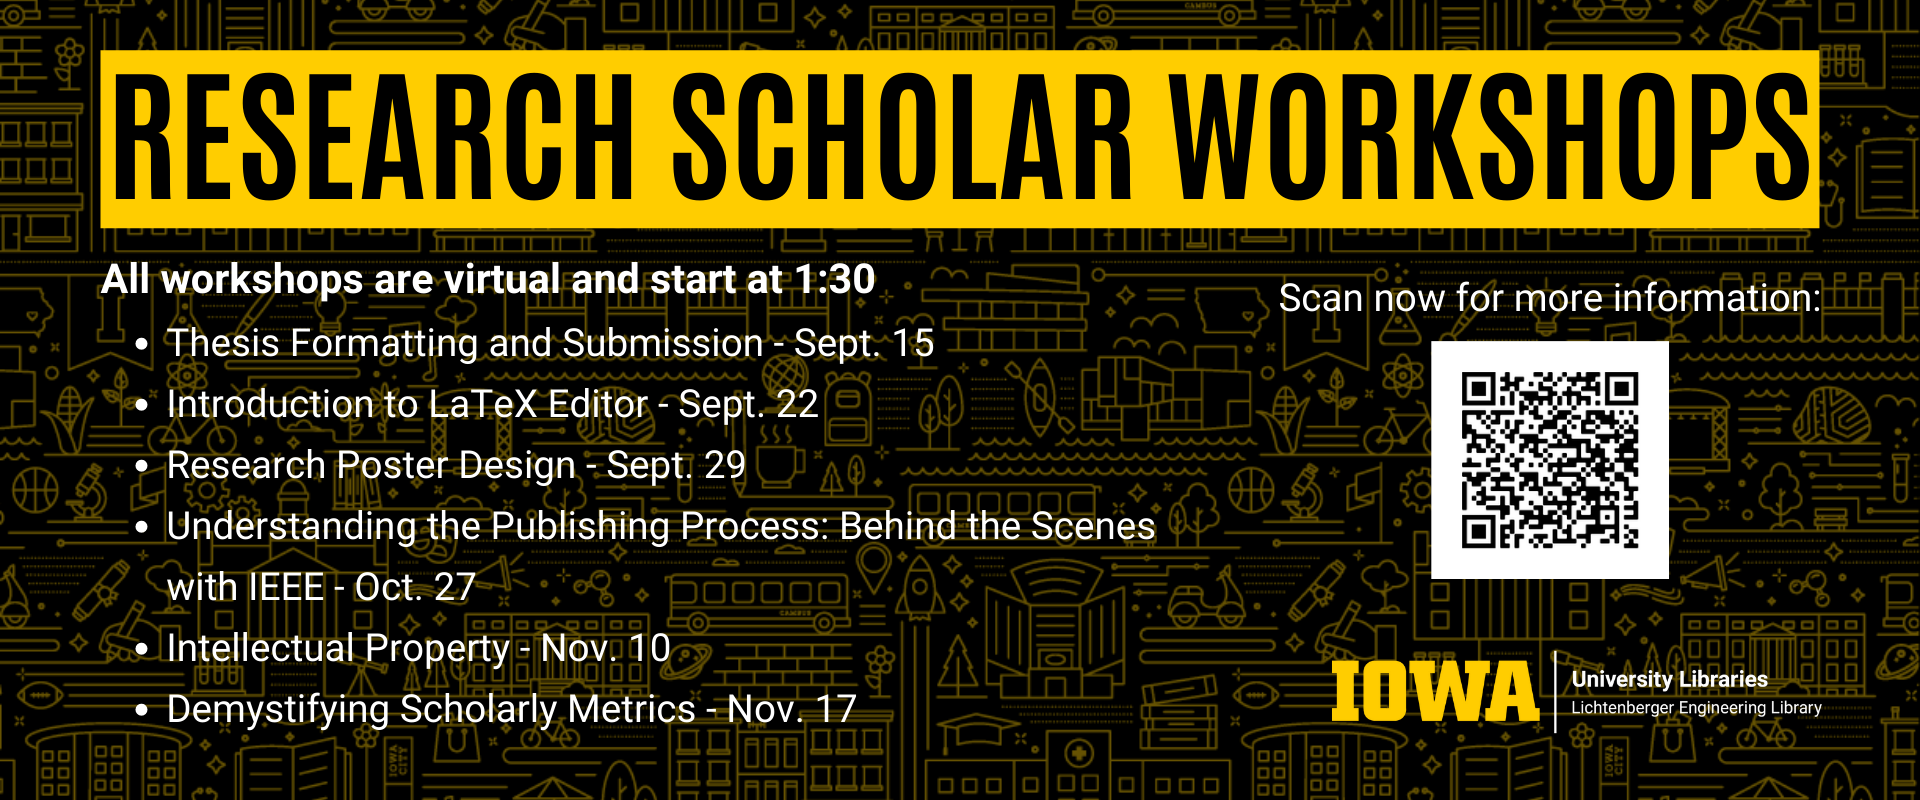 Fall 2021 Research Scholar Workshops